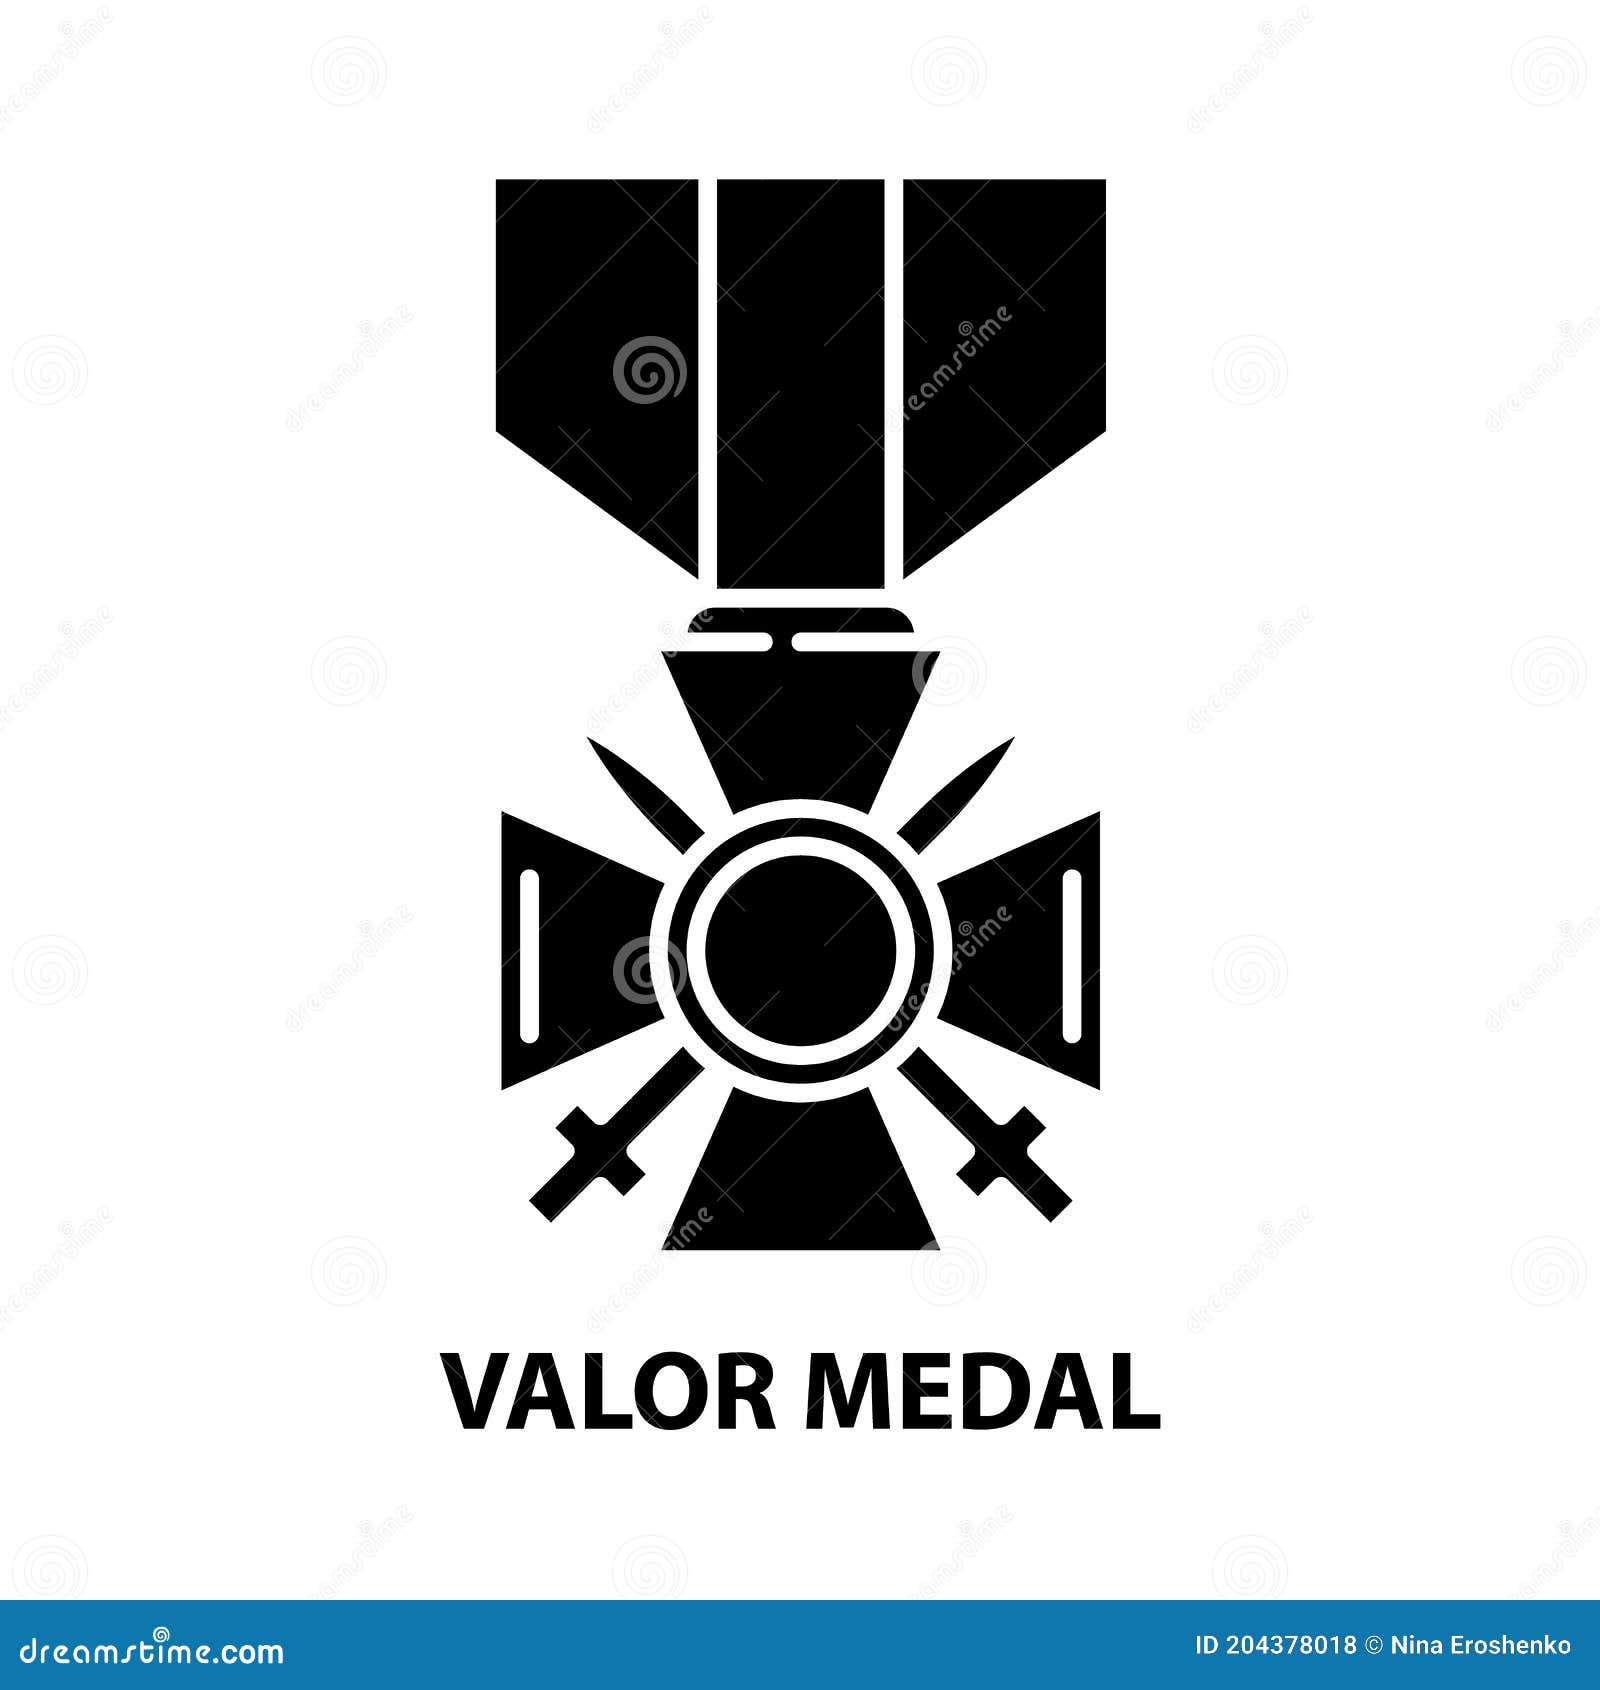 Valor Medal Icon Black Vector Sign With Editable Strokes Concept